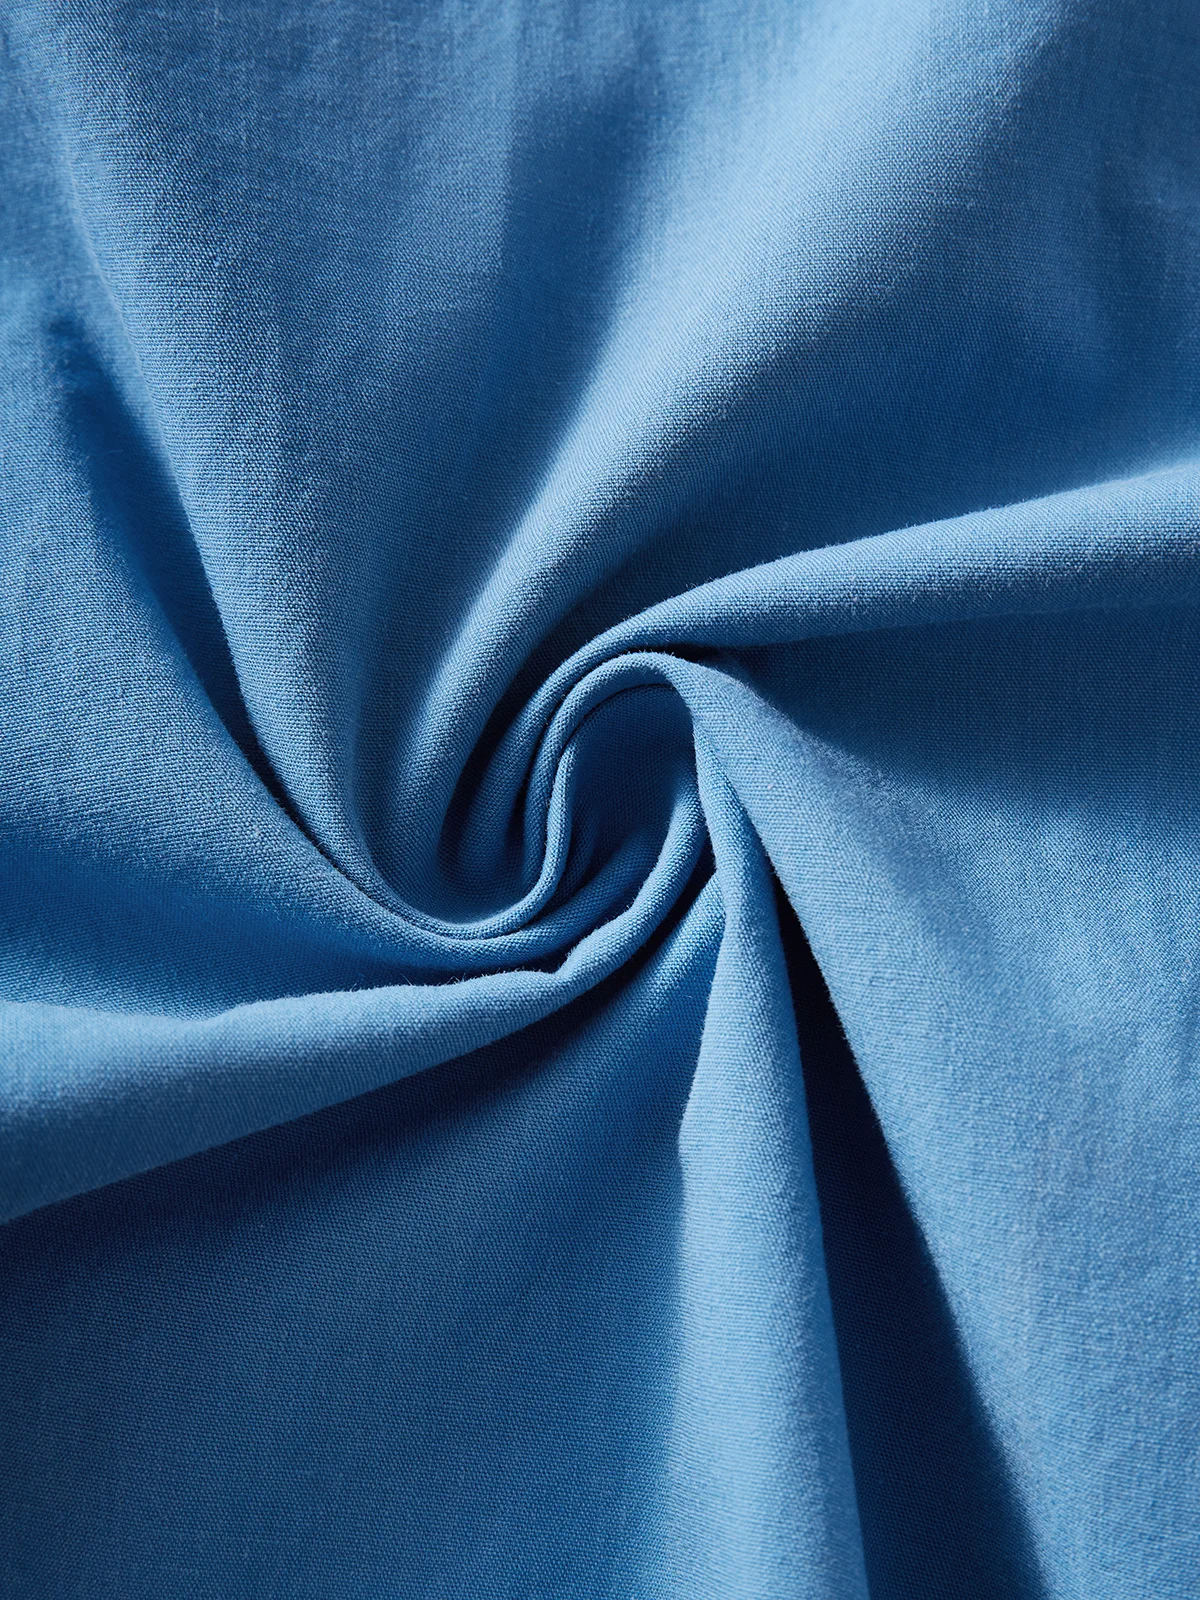 Hardaddy 100%Cotton Patchwork Floral Regular Fit Blue Men Short Sleeve Hawaiian Casual Shirt